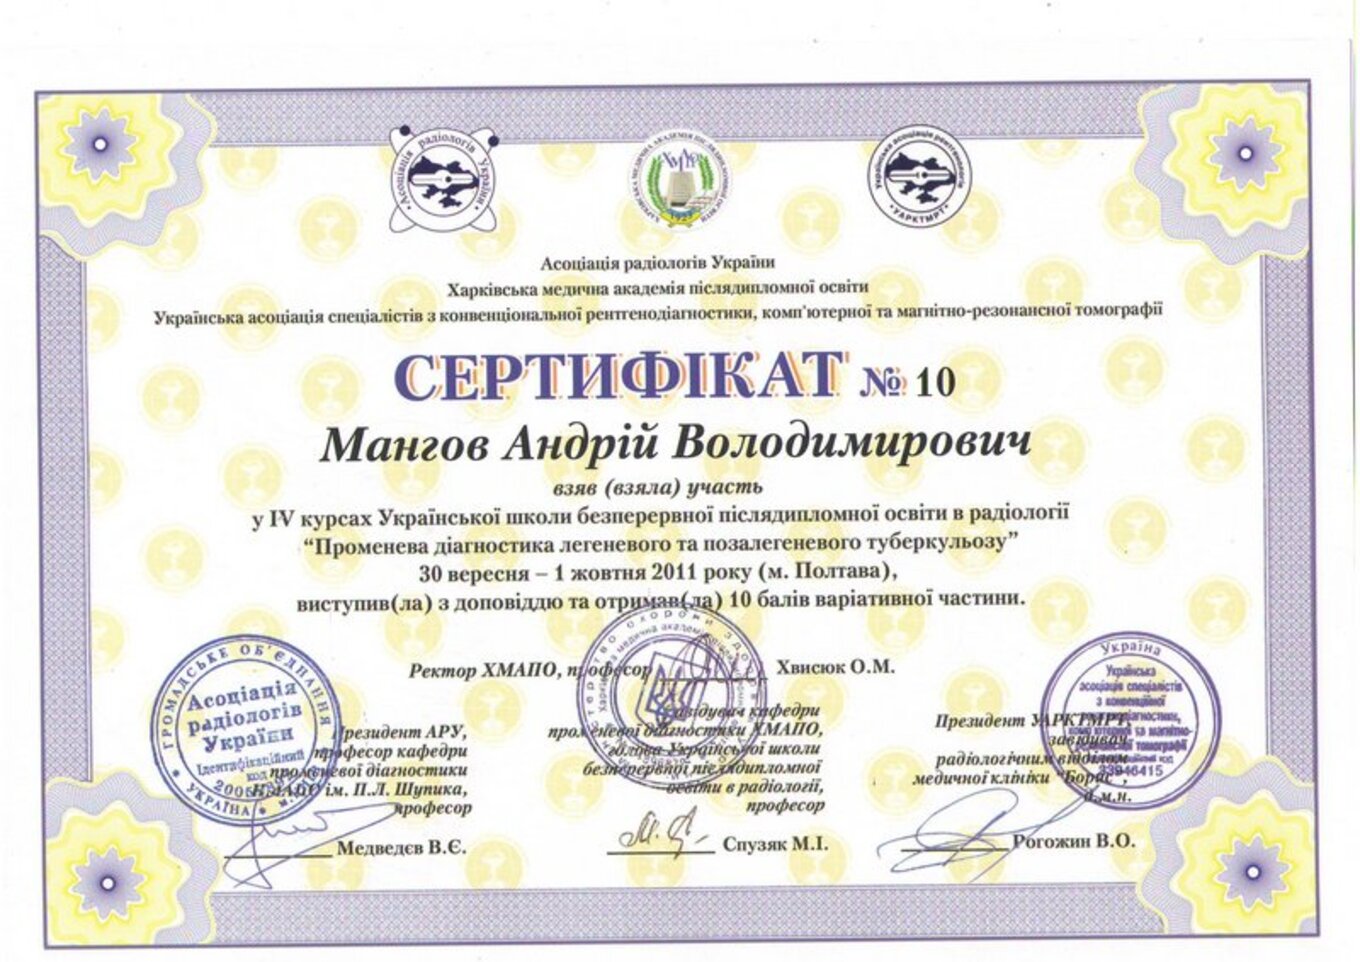 certificates/mangov-andrij-volodimirovich/mangov-certificates-13.jpg